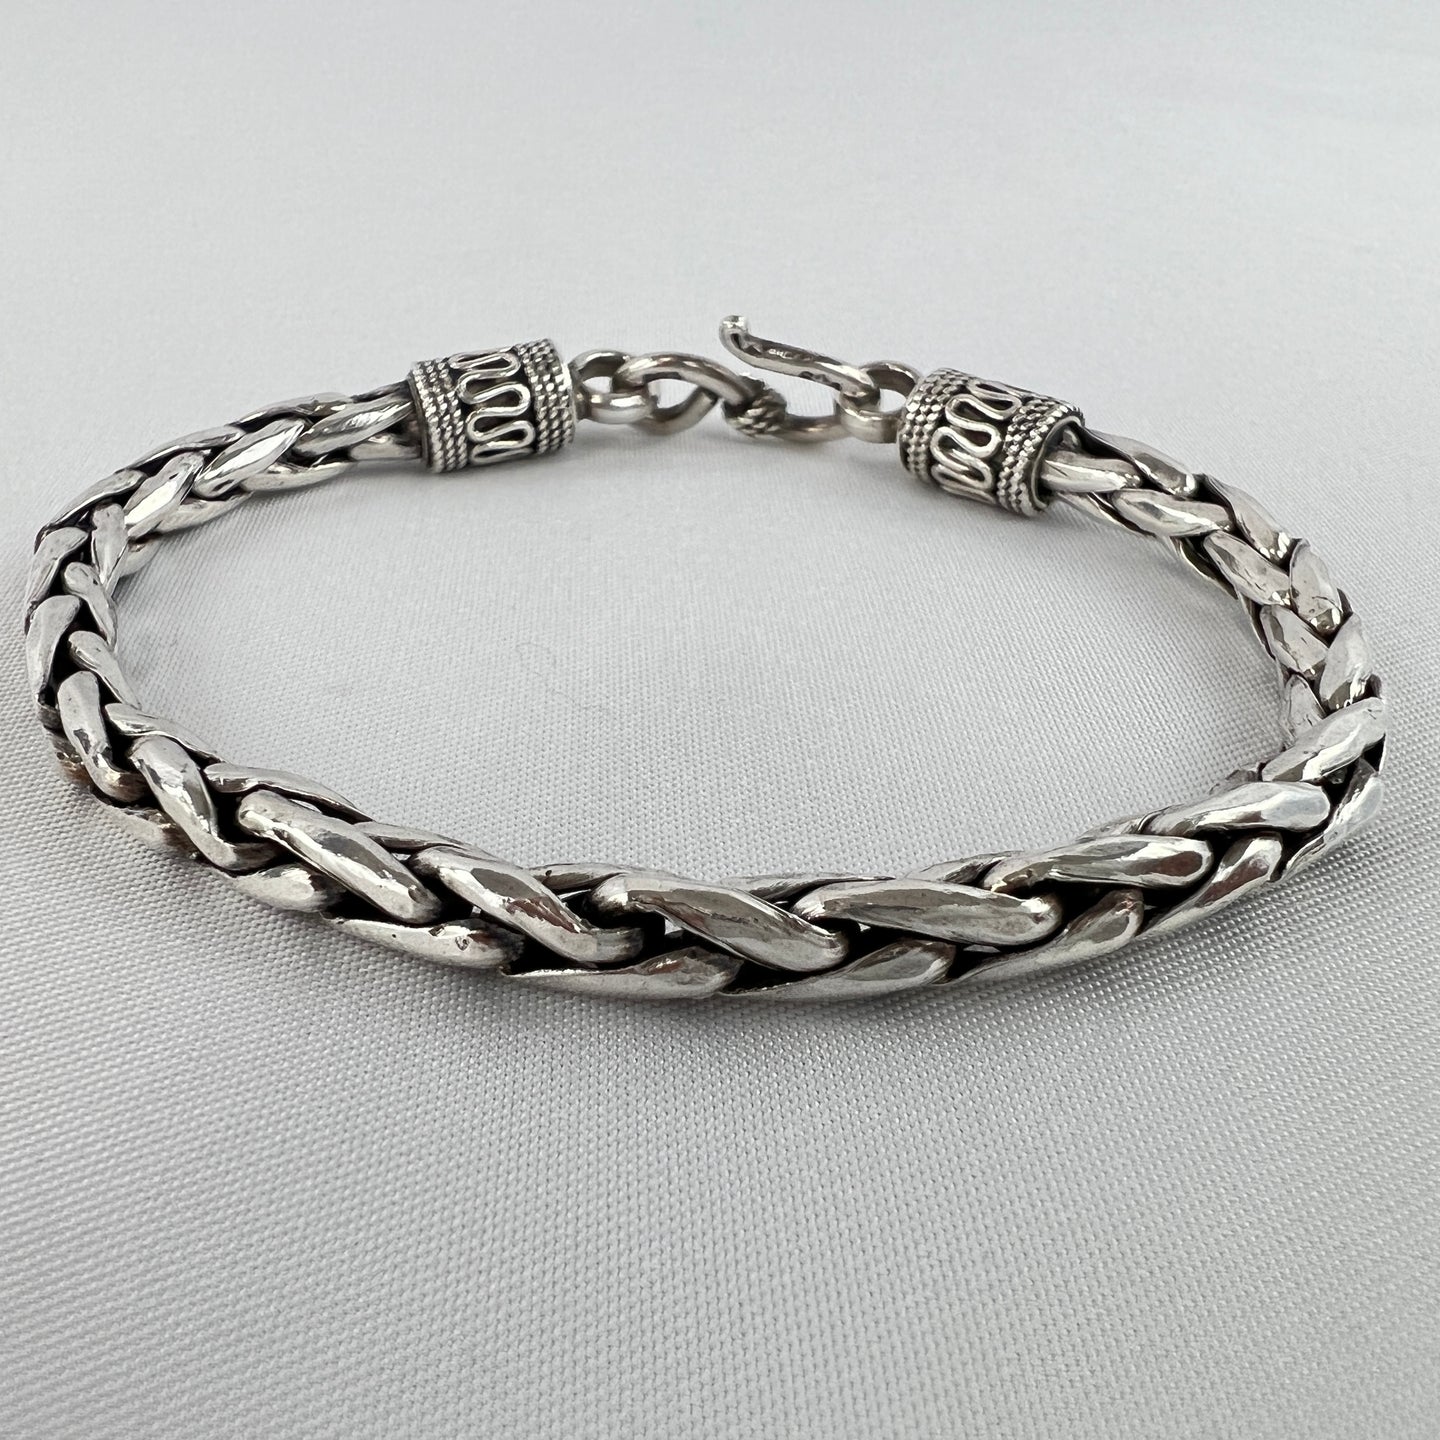 Vintage Sterling Silver Braided Chain Bracelet 7 1/4